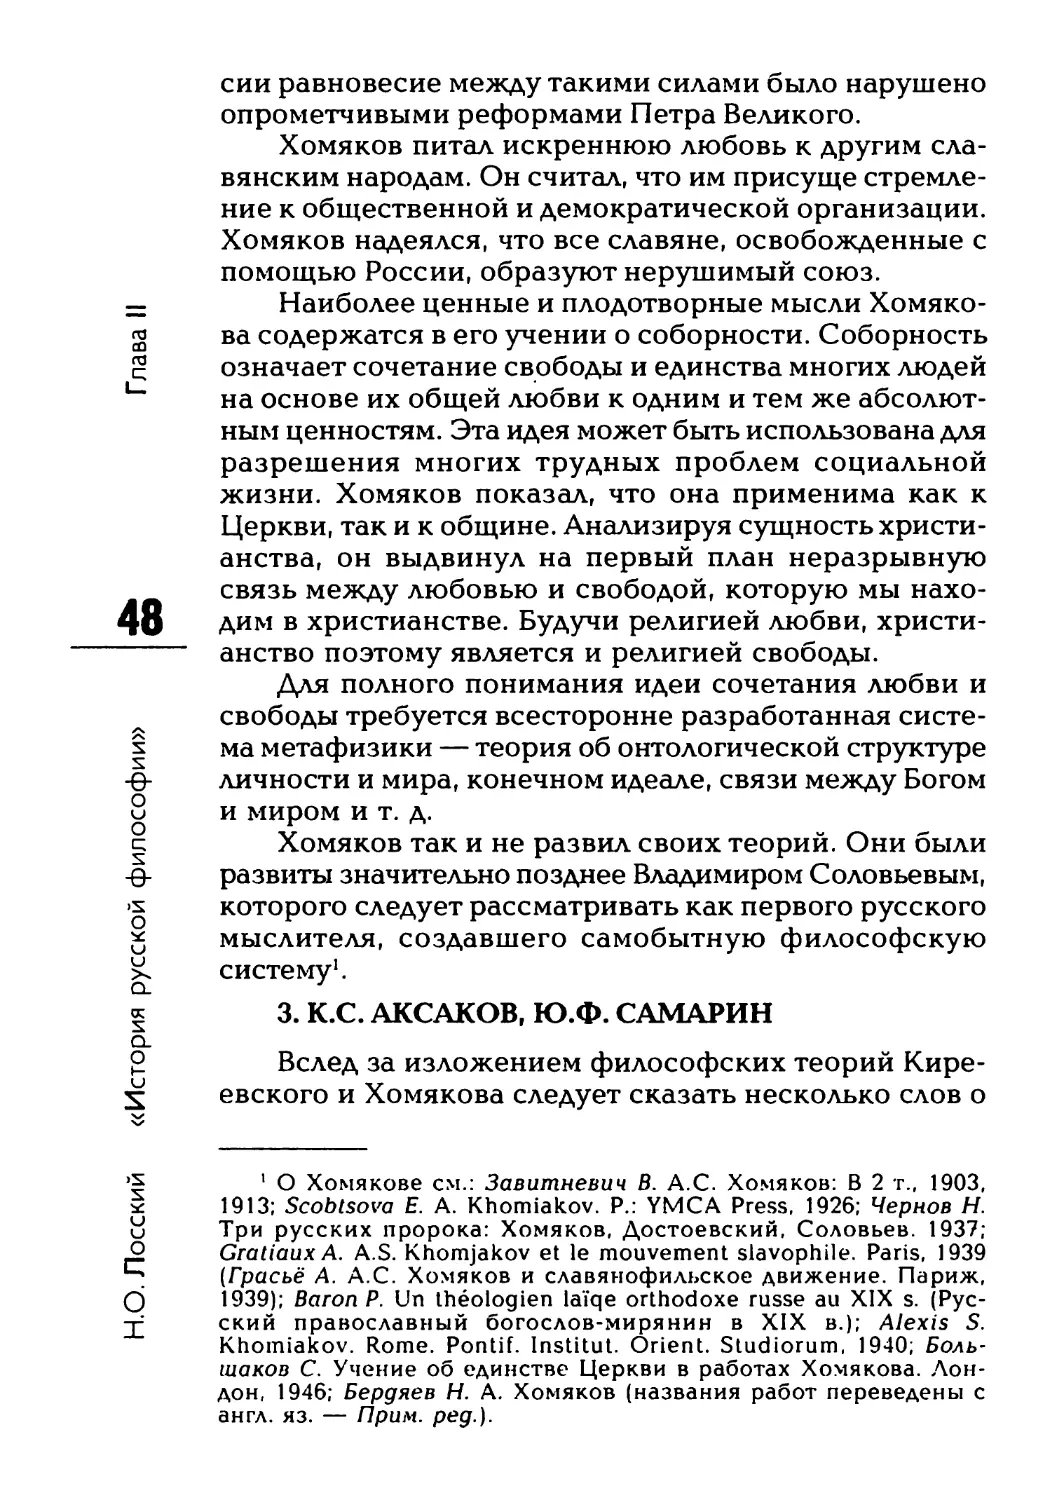 3. К.С. Аксаков, Ю.Ф. Самарин